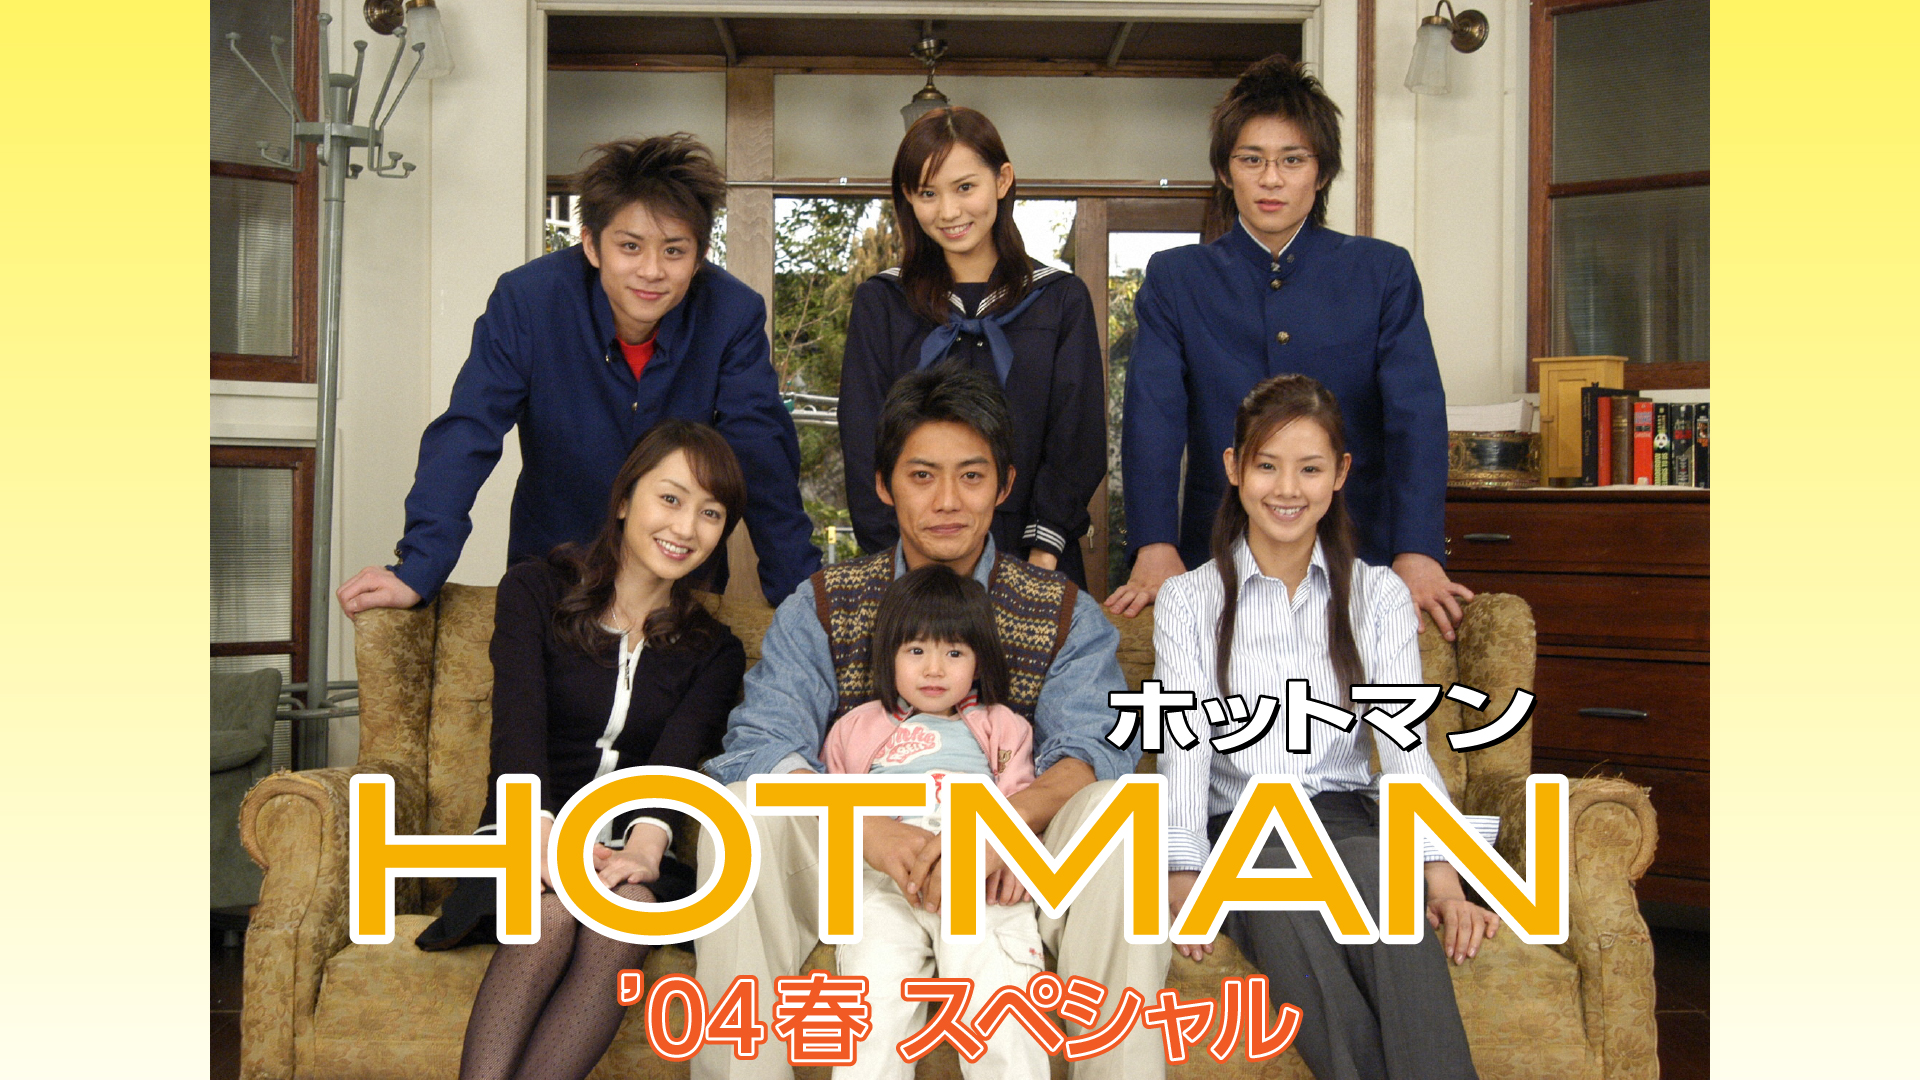 HOTMAN ホットマン【シーズン1 + 2】DVD 全10巻 春スペシャル1巻